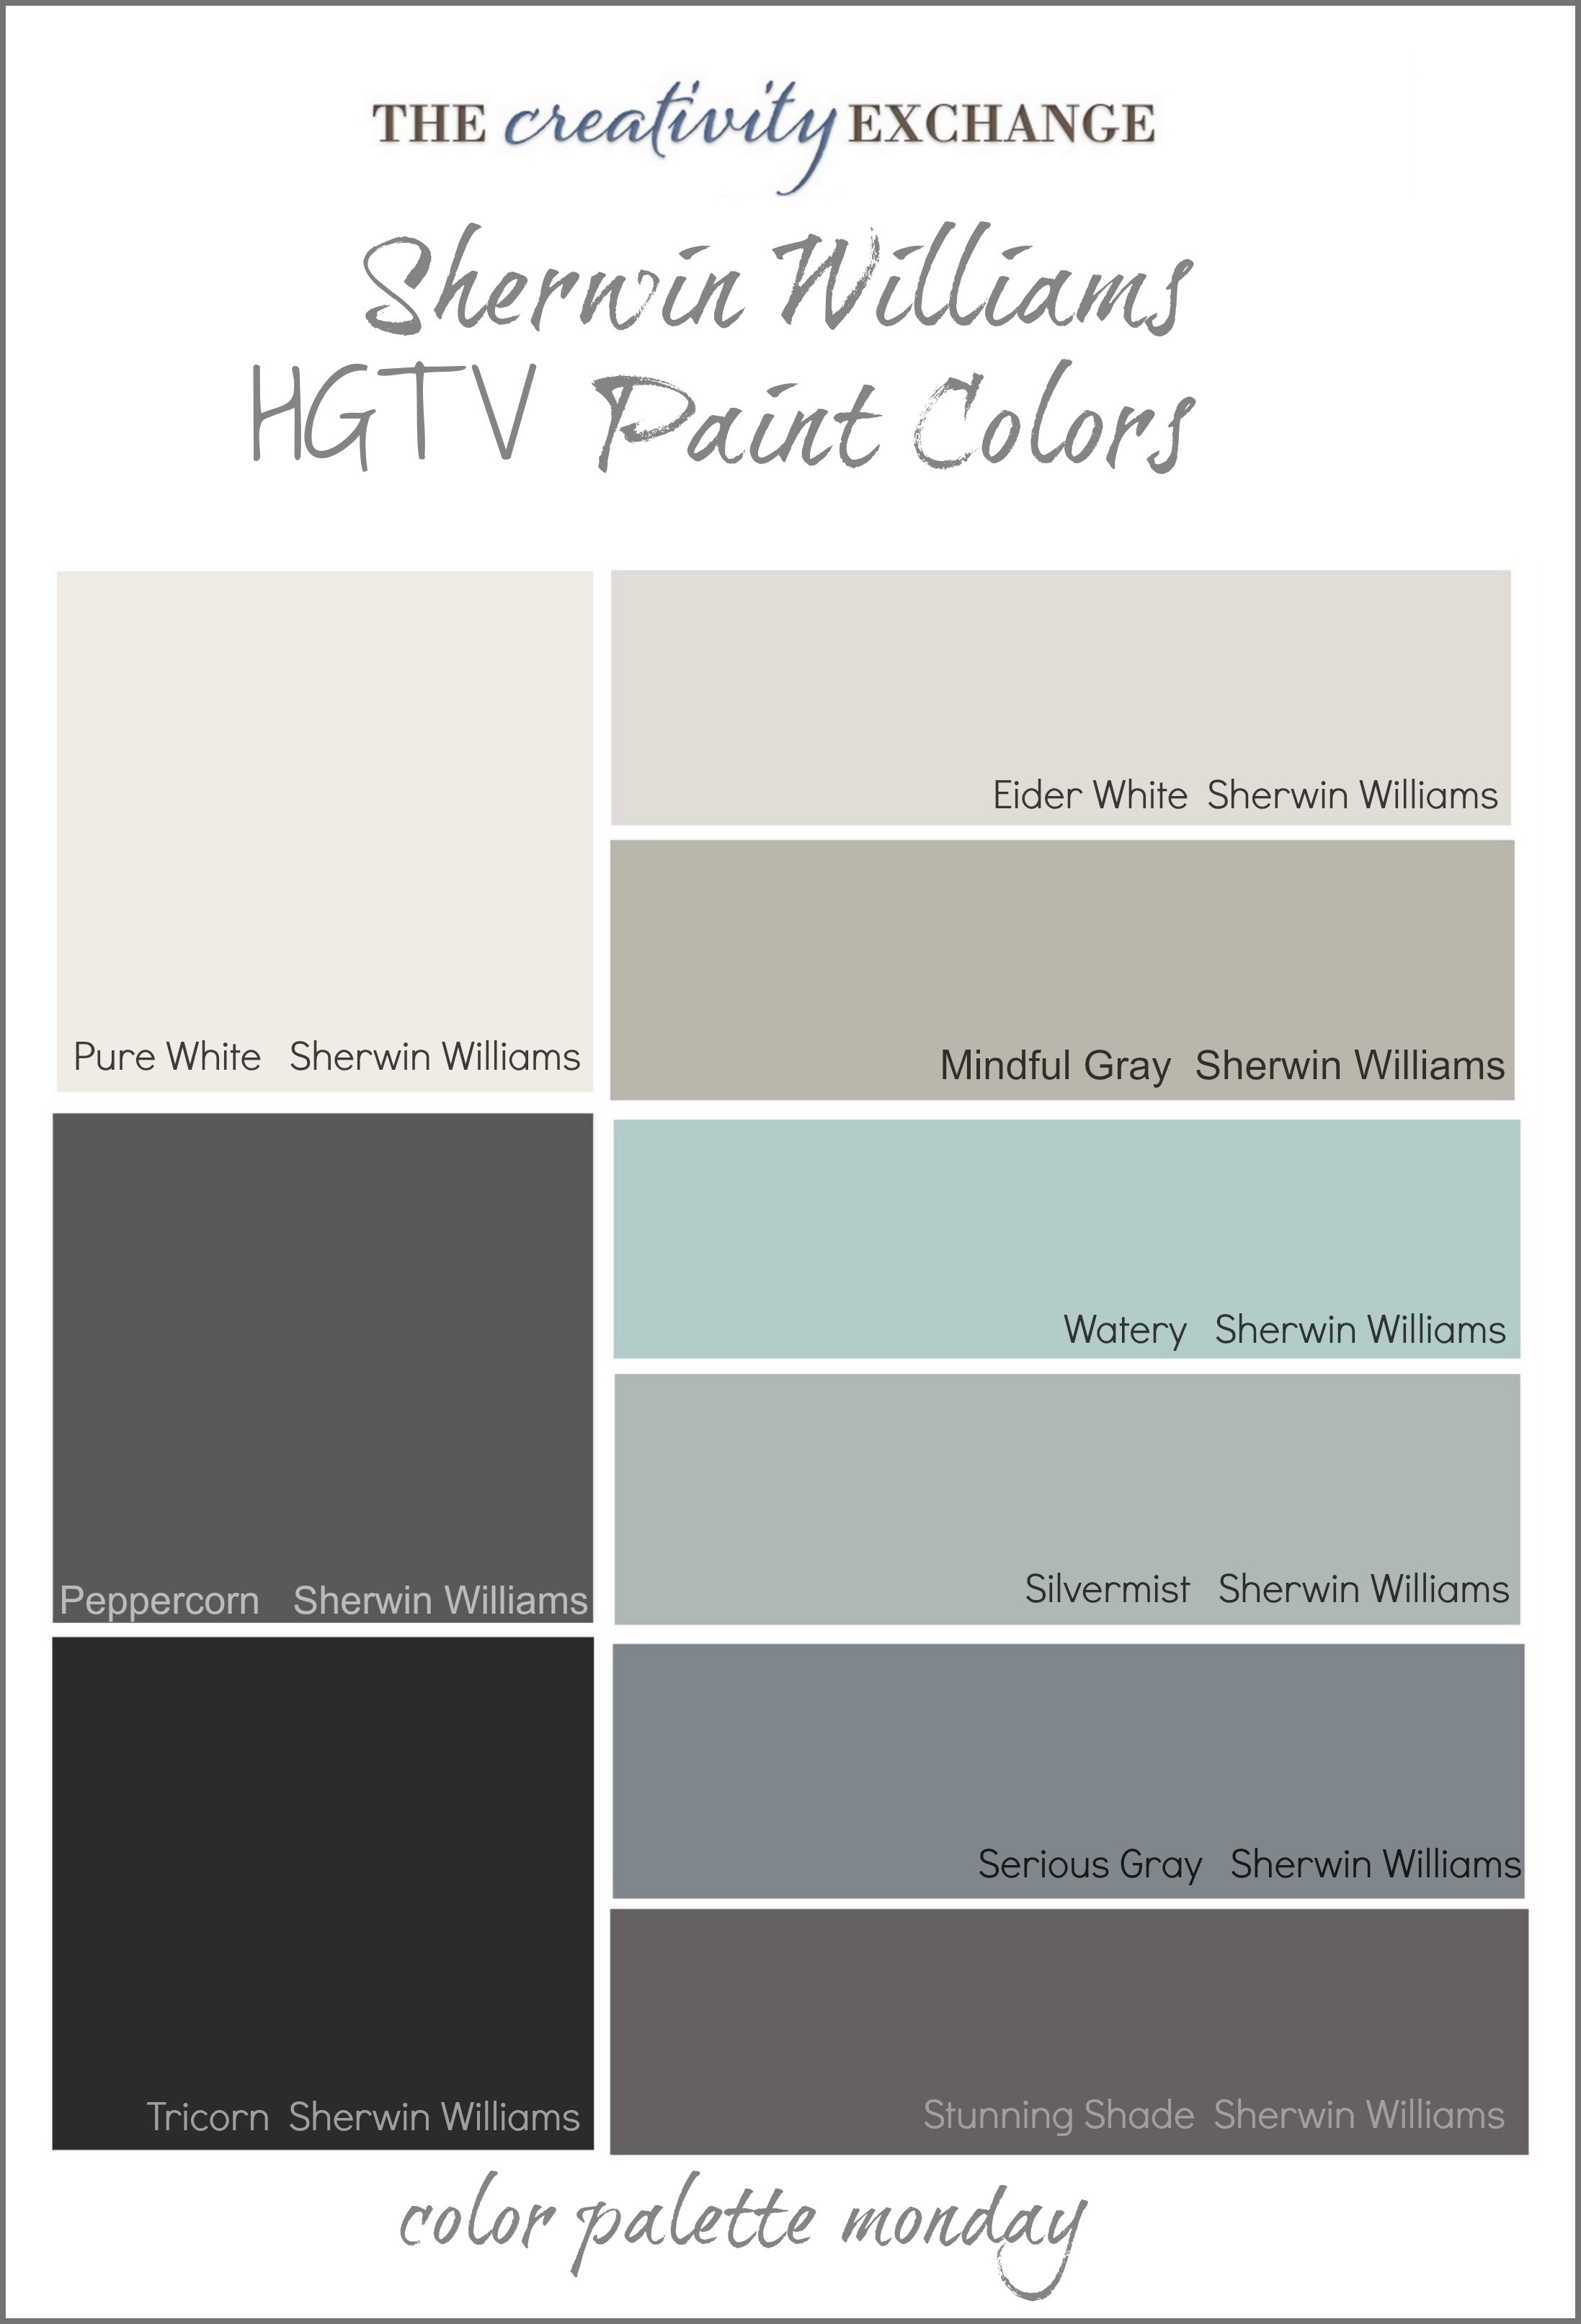 Best ideas about Grey Paint Colors
. Save or Pin Readers Favorite Paint Colors Color Palette Monday Now.